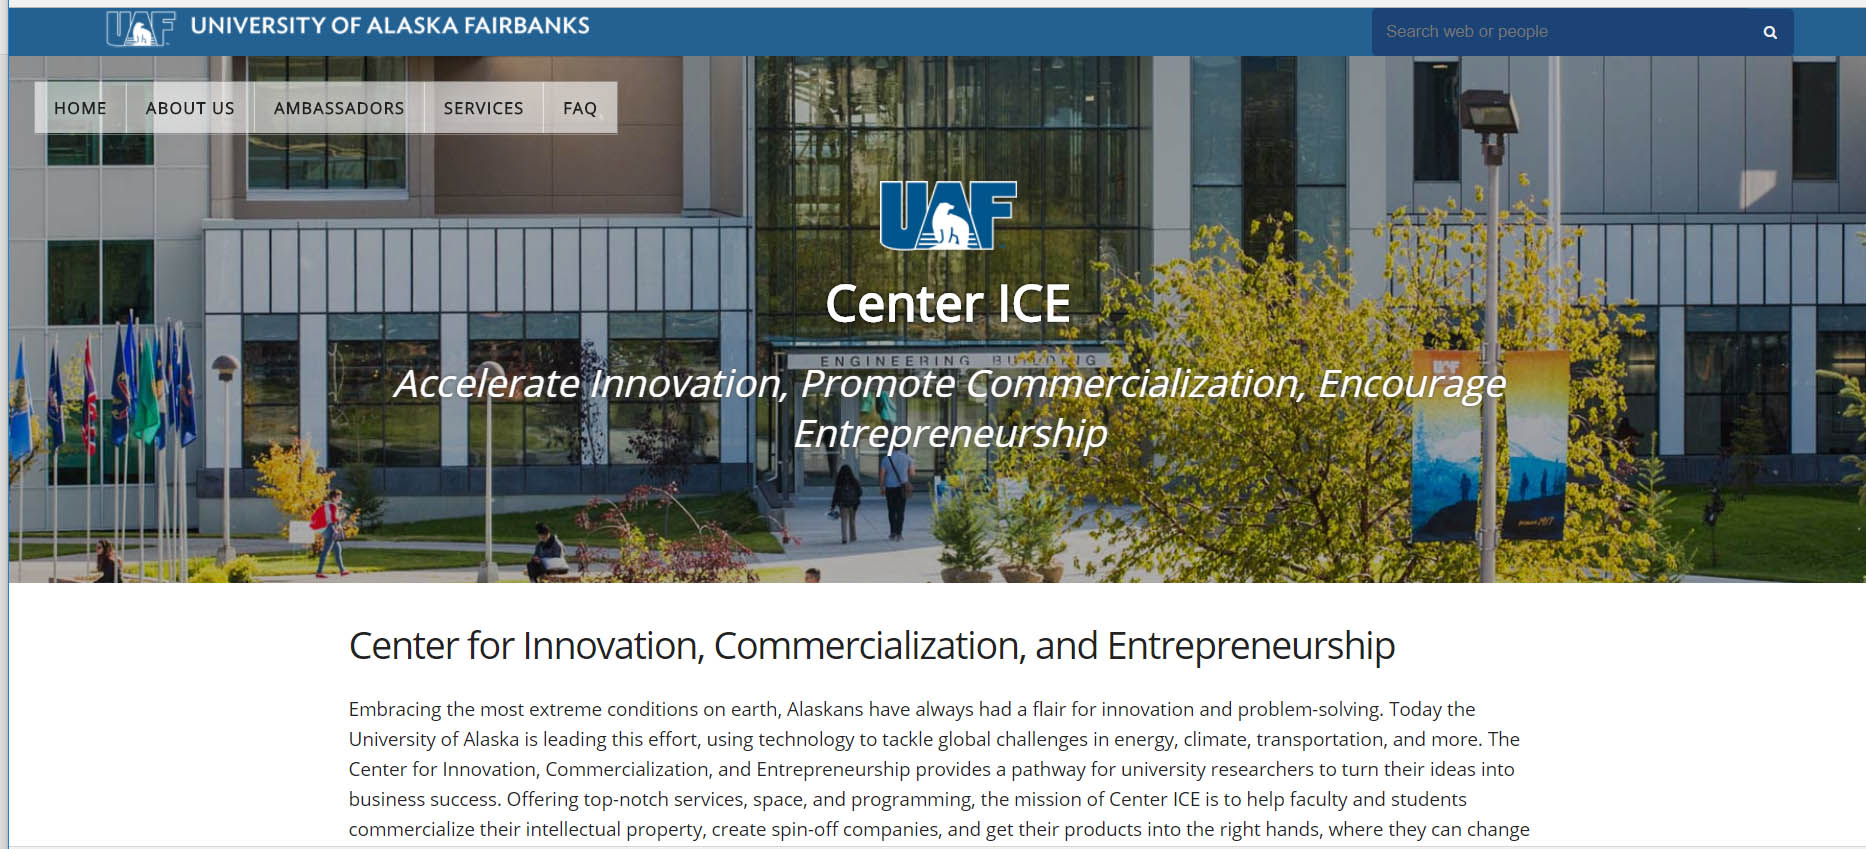 Center ICE website image